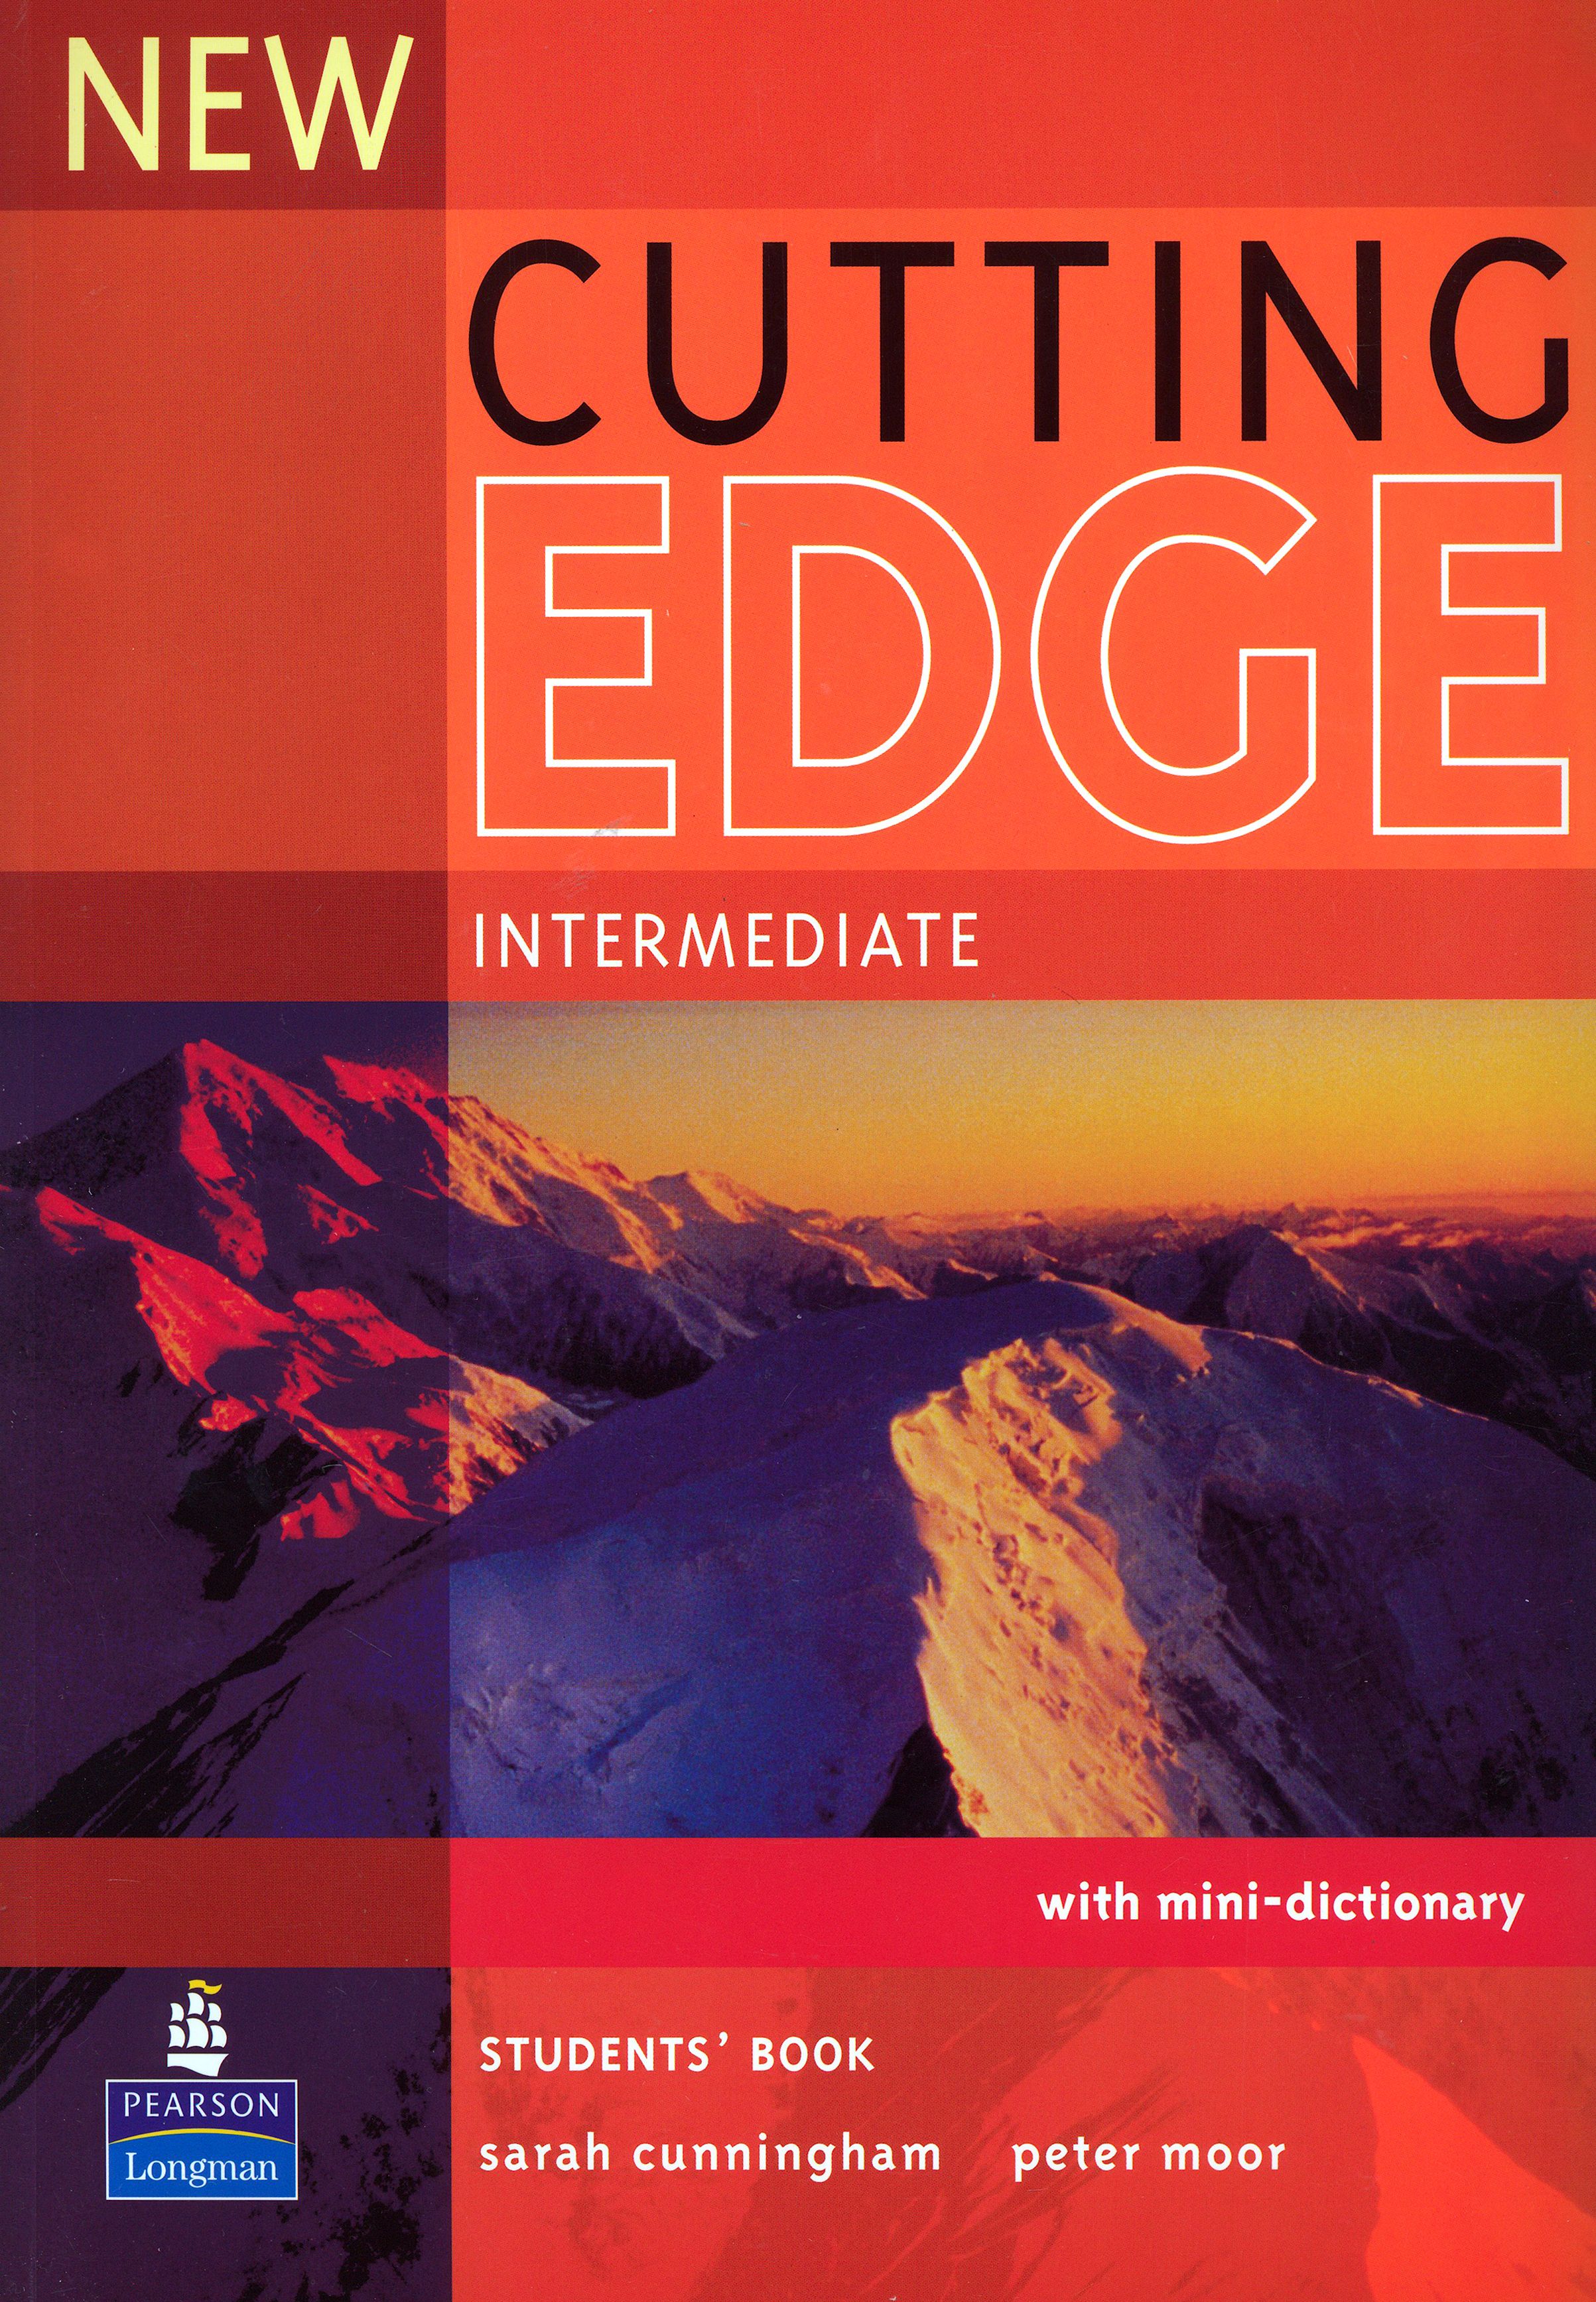 New cutting intermediate. New Cutting Edge учебник. New Cutting Edge Upper Intermediate student's book. Cutting Edge Intermediate 3rd Edition. Cutting Edge Intermediate student's book.